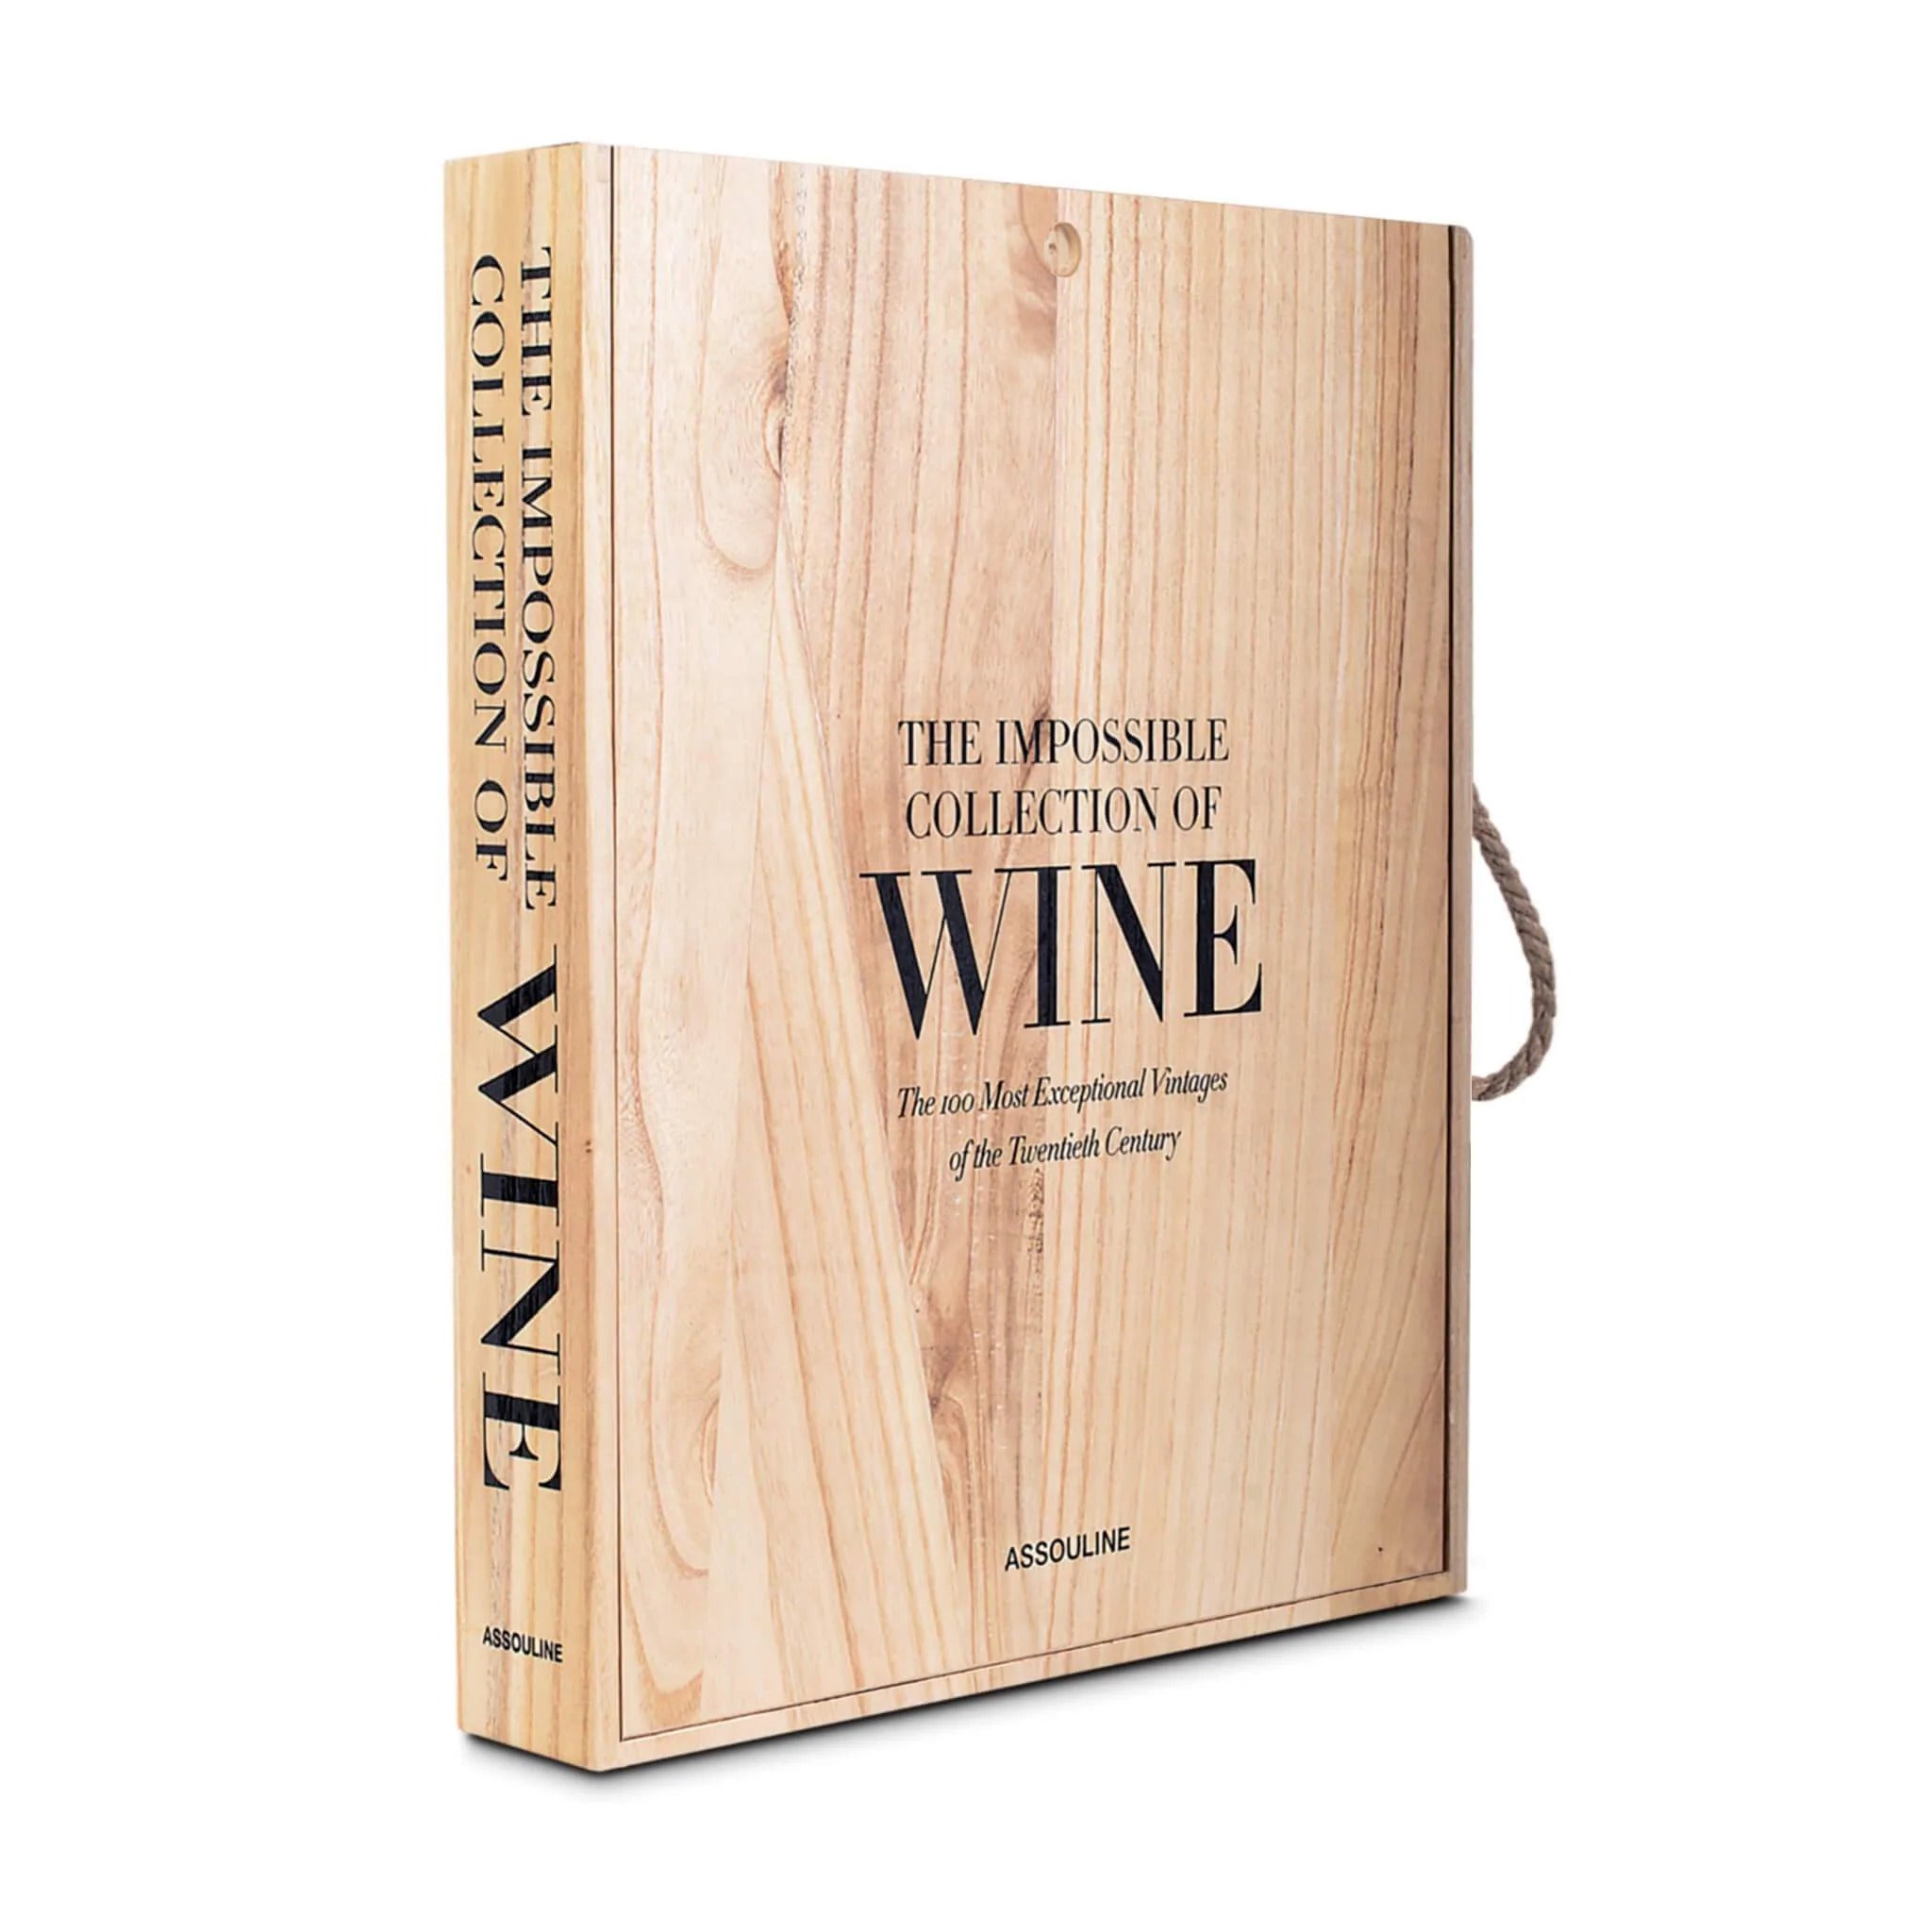 THE IMPOSSIBLE COLLECTION  OF WINE, libro decorativo sobre gastronomía de Assouline